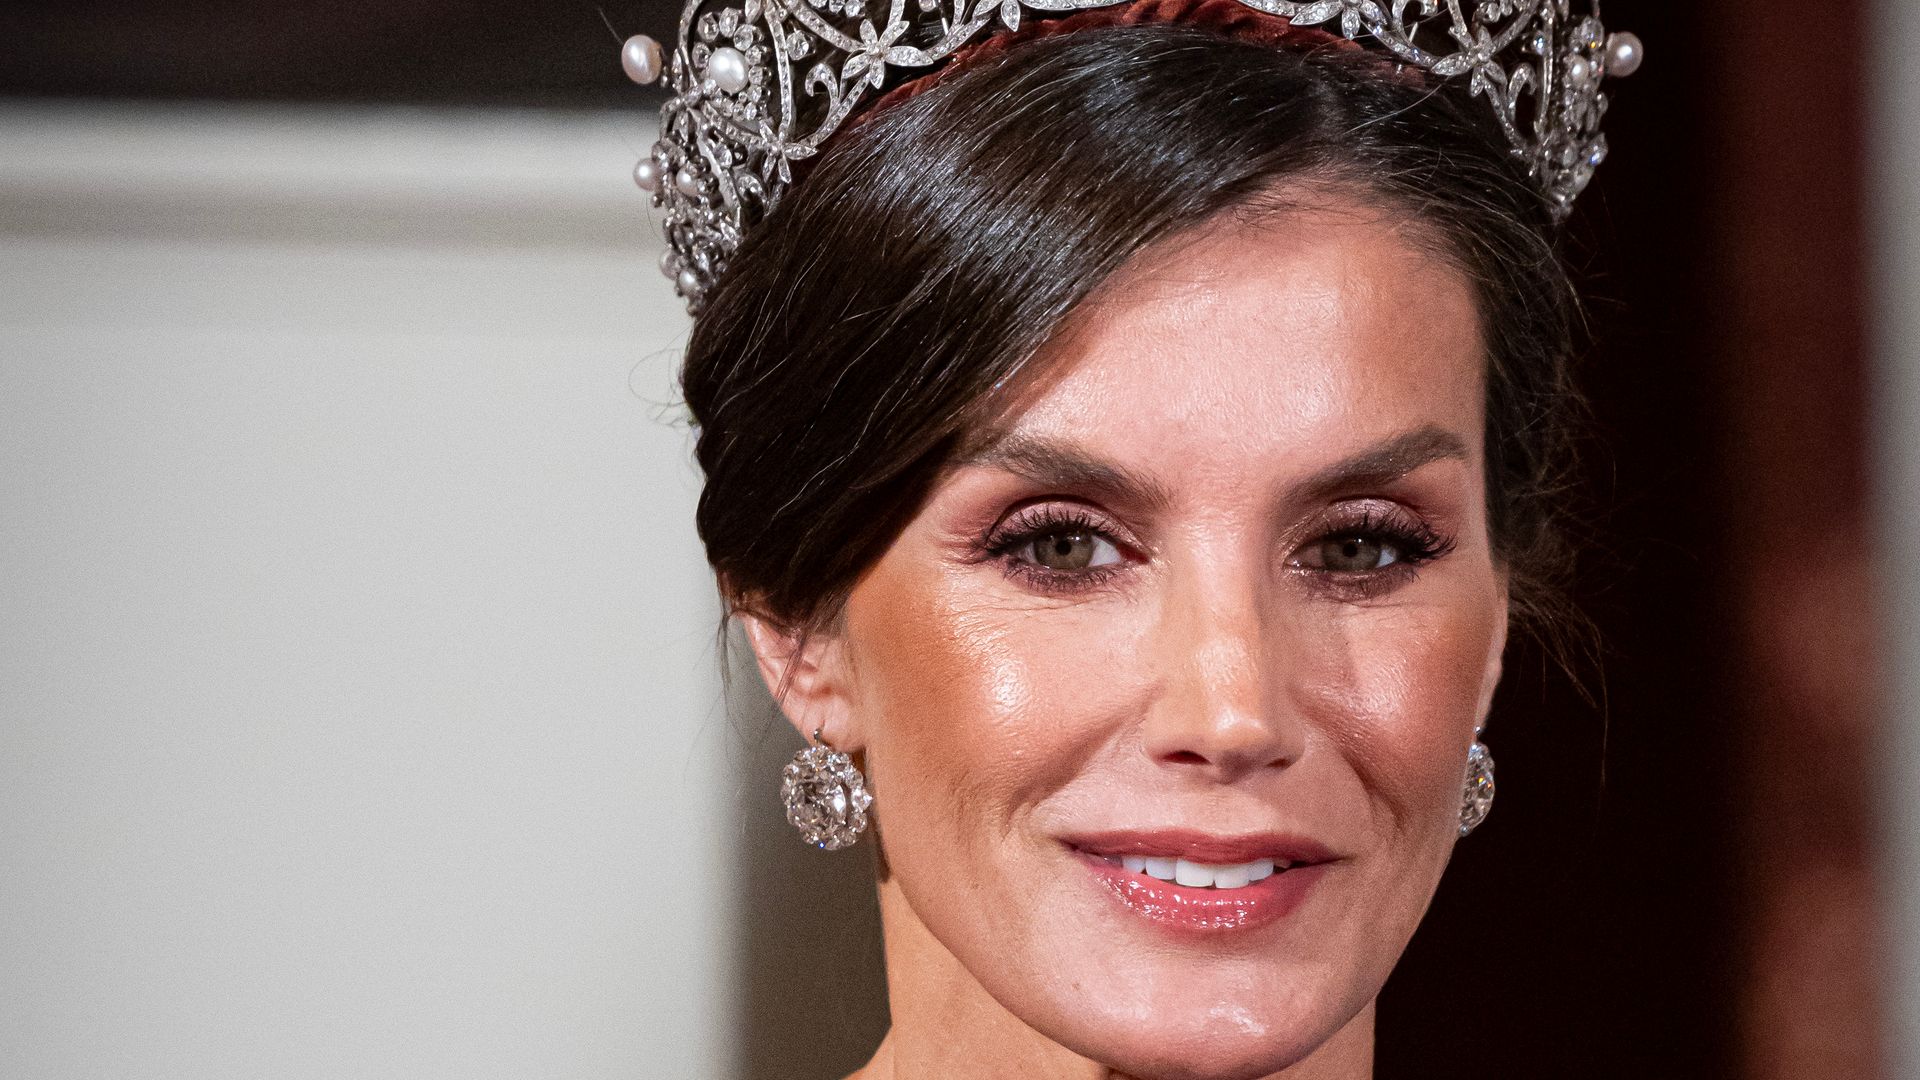 Queen Letizia dazzles in spellbinding tiara at Dutch state banquet